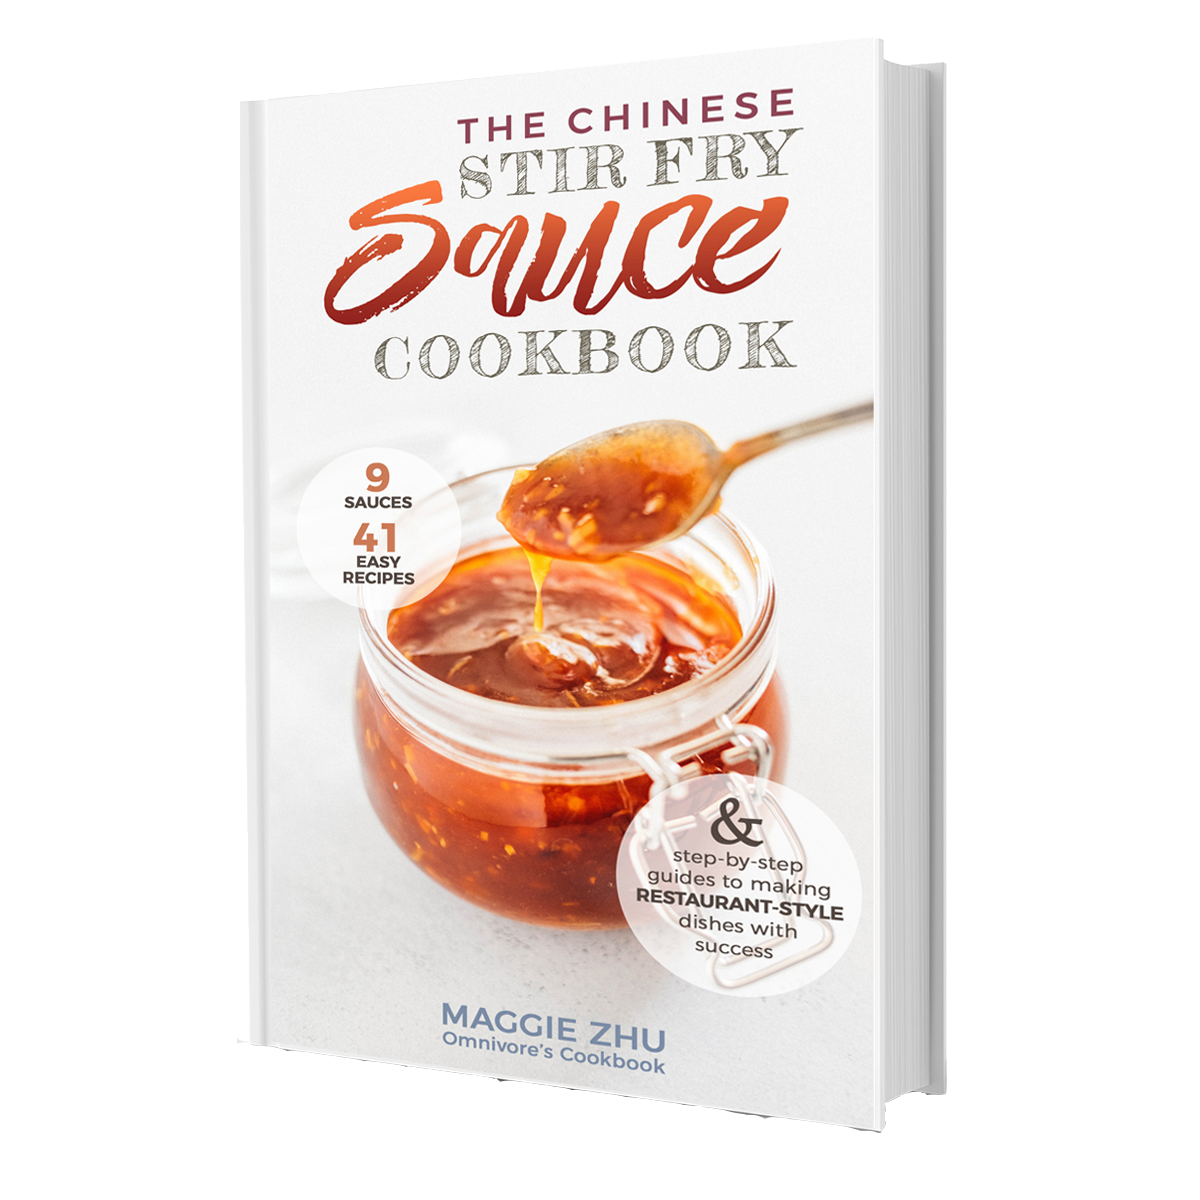 https://omnivorescookbook.com/wp-content/uploads/2022/09/cookbook.png